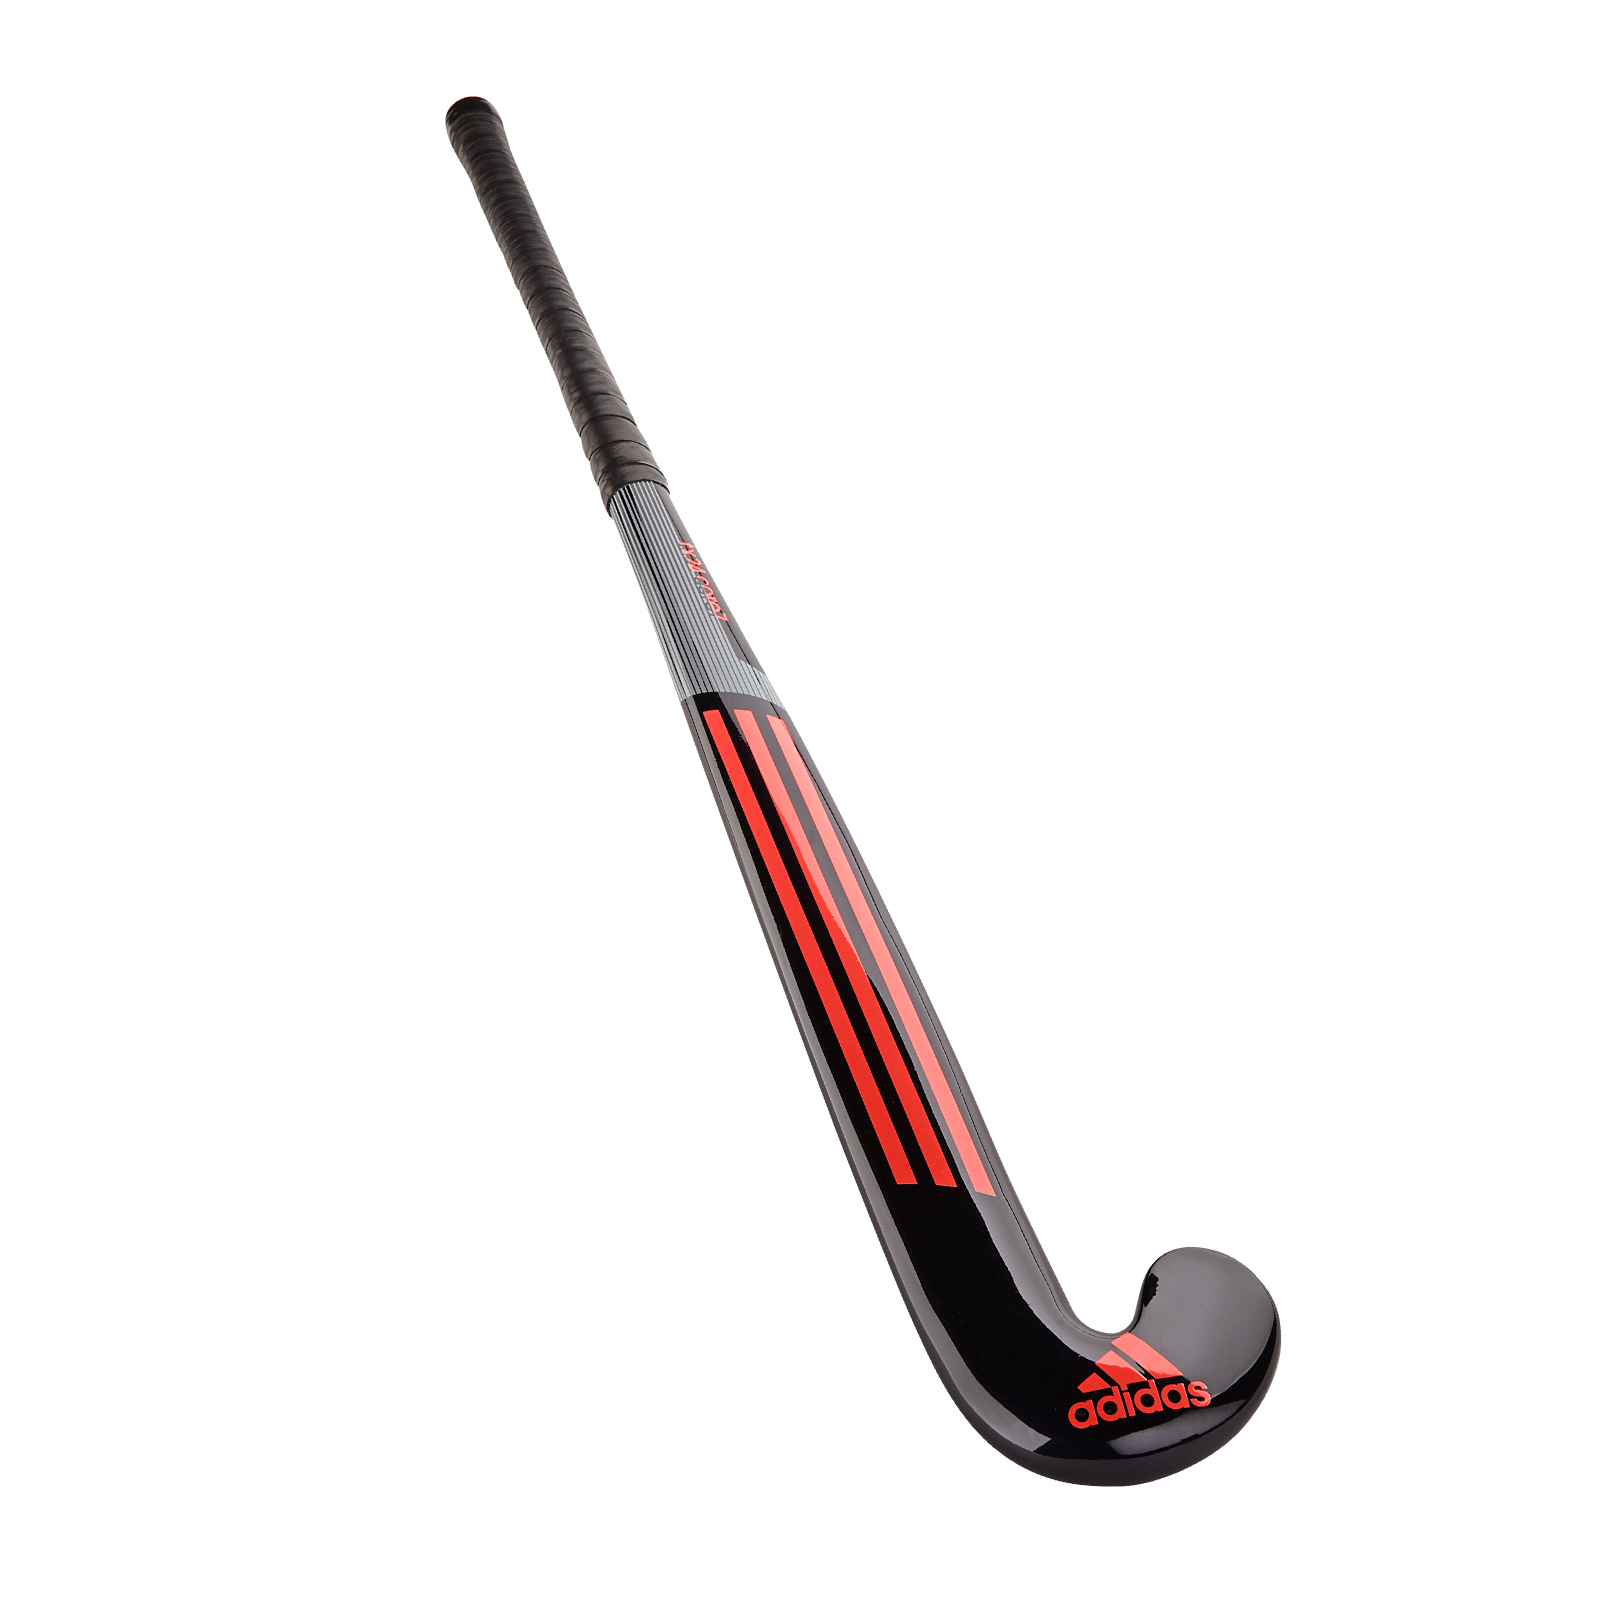 Field hockey stick